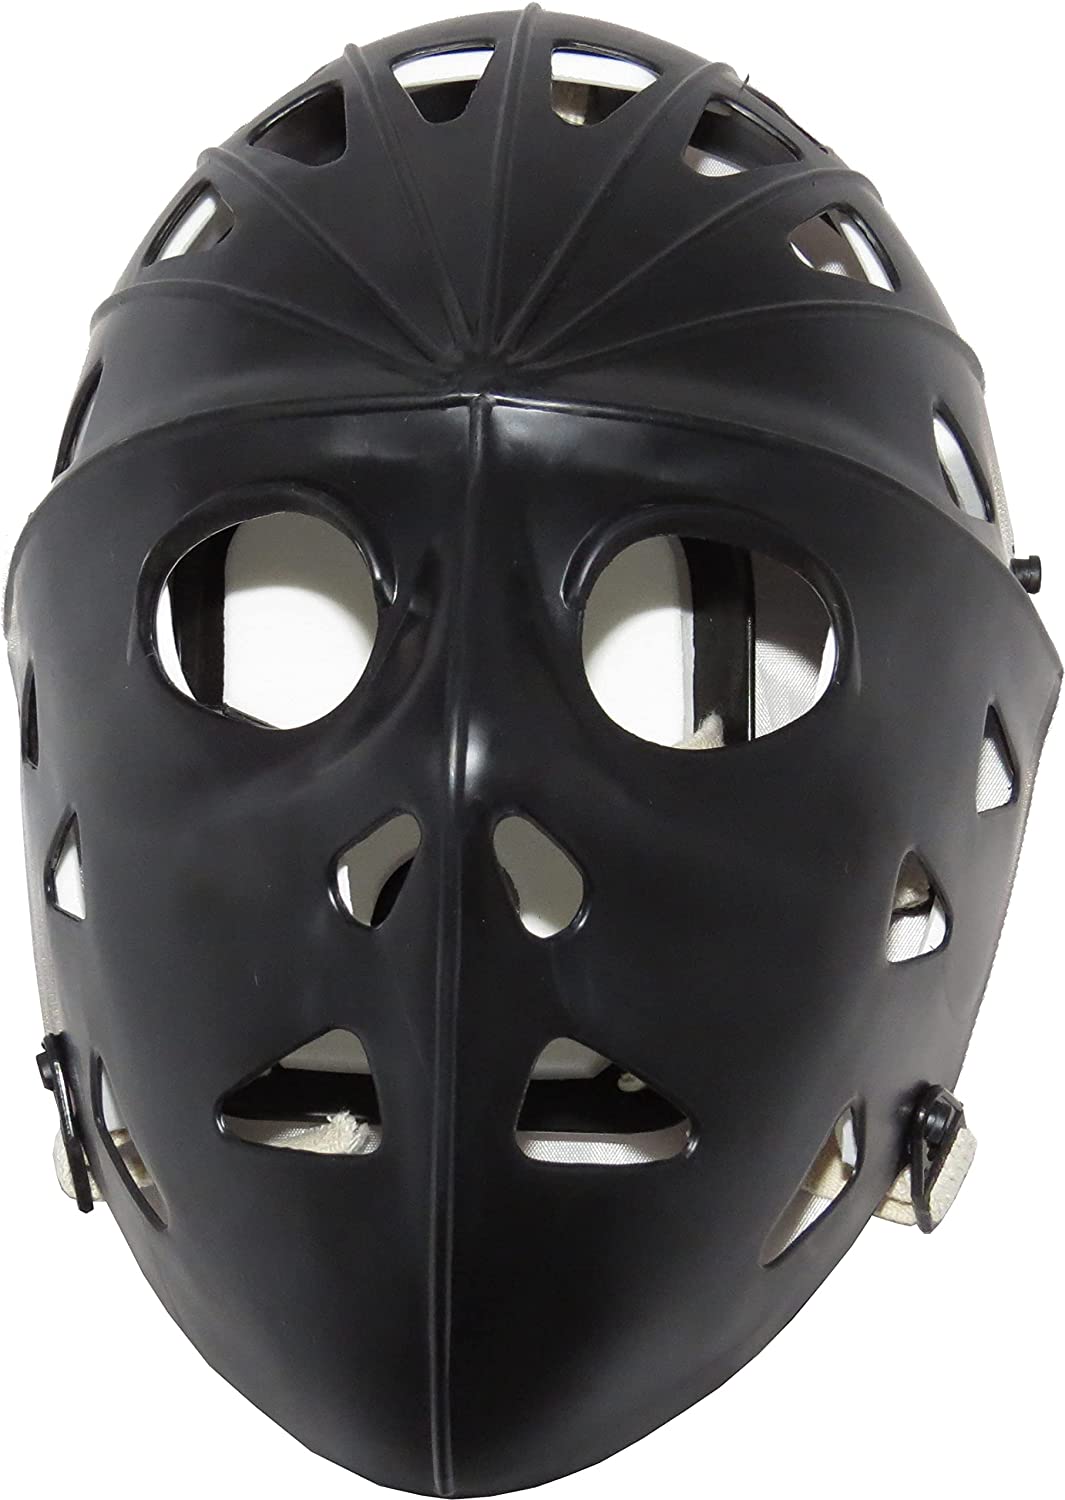 Mylec Athletic Hockey Pro Goalie Mask - Black - Pro-Distributing